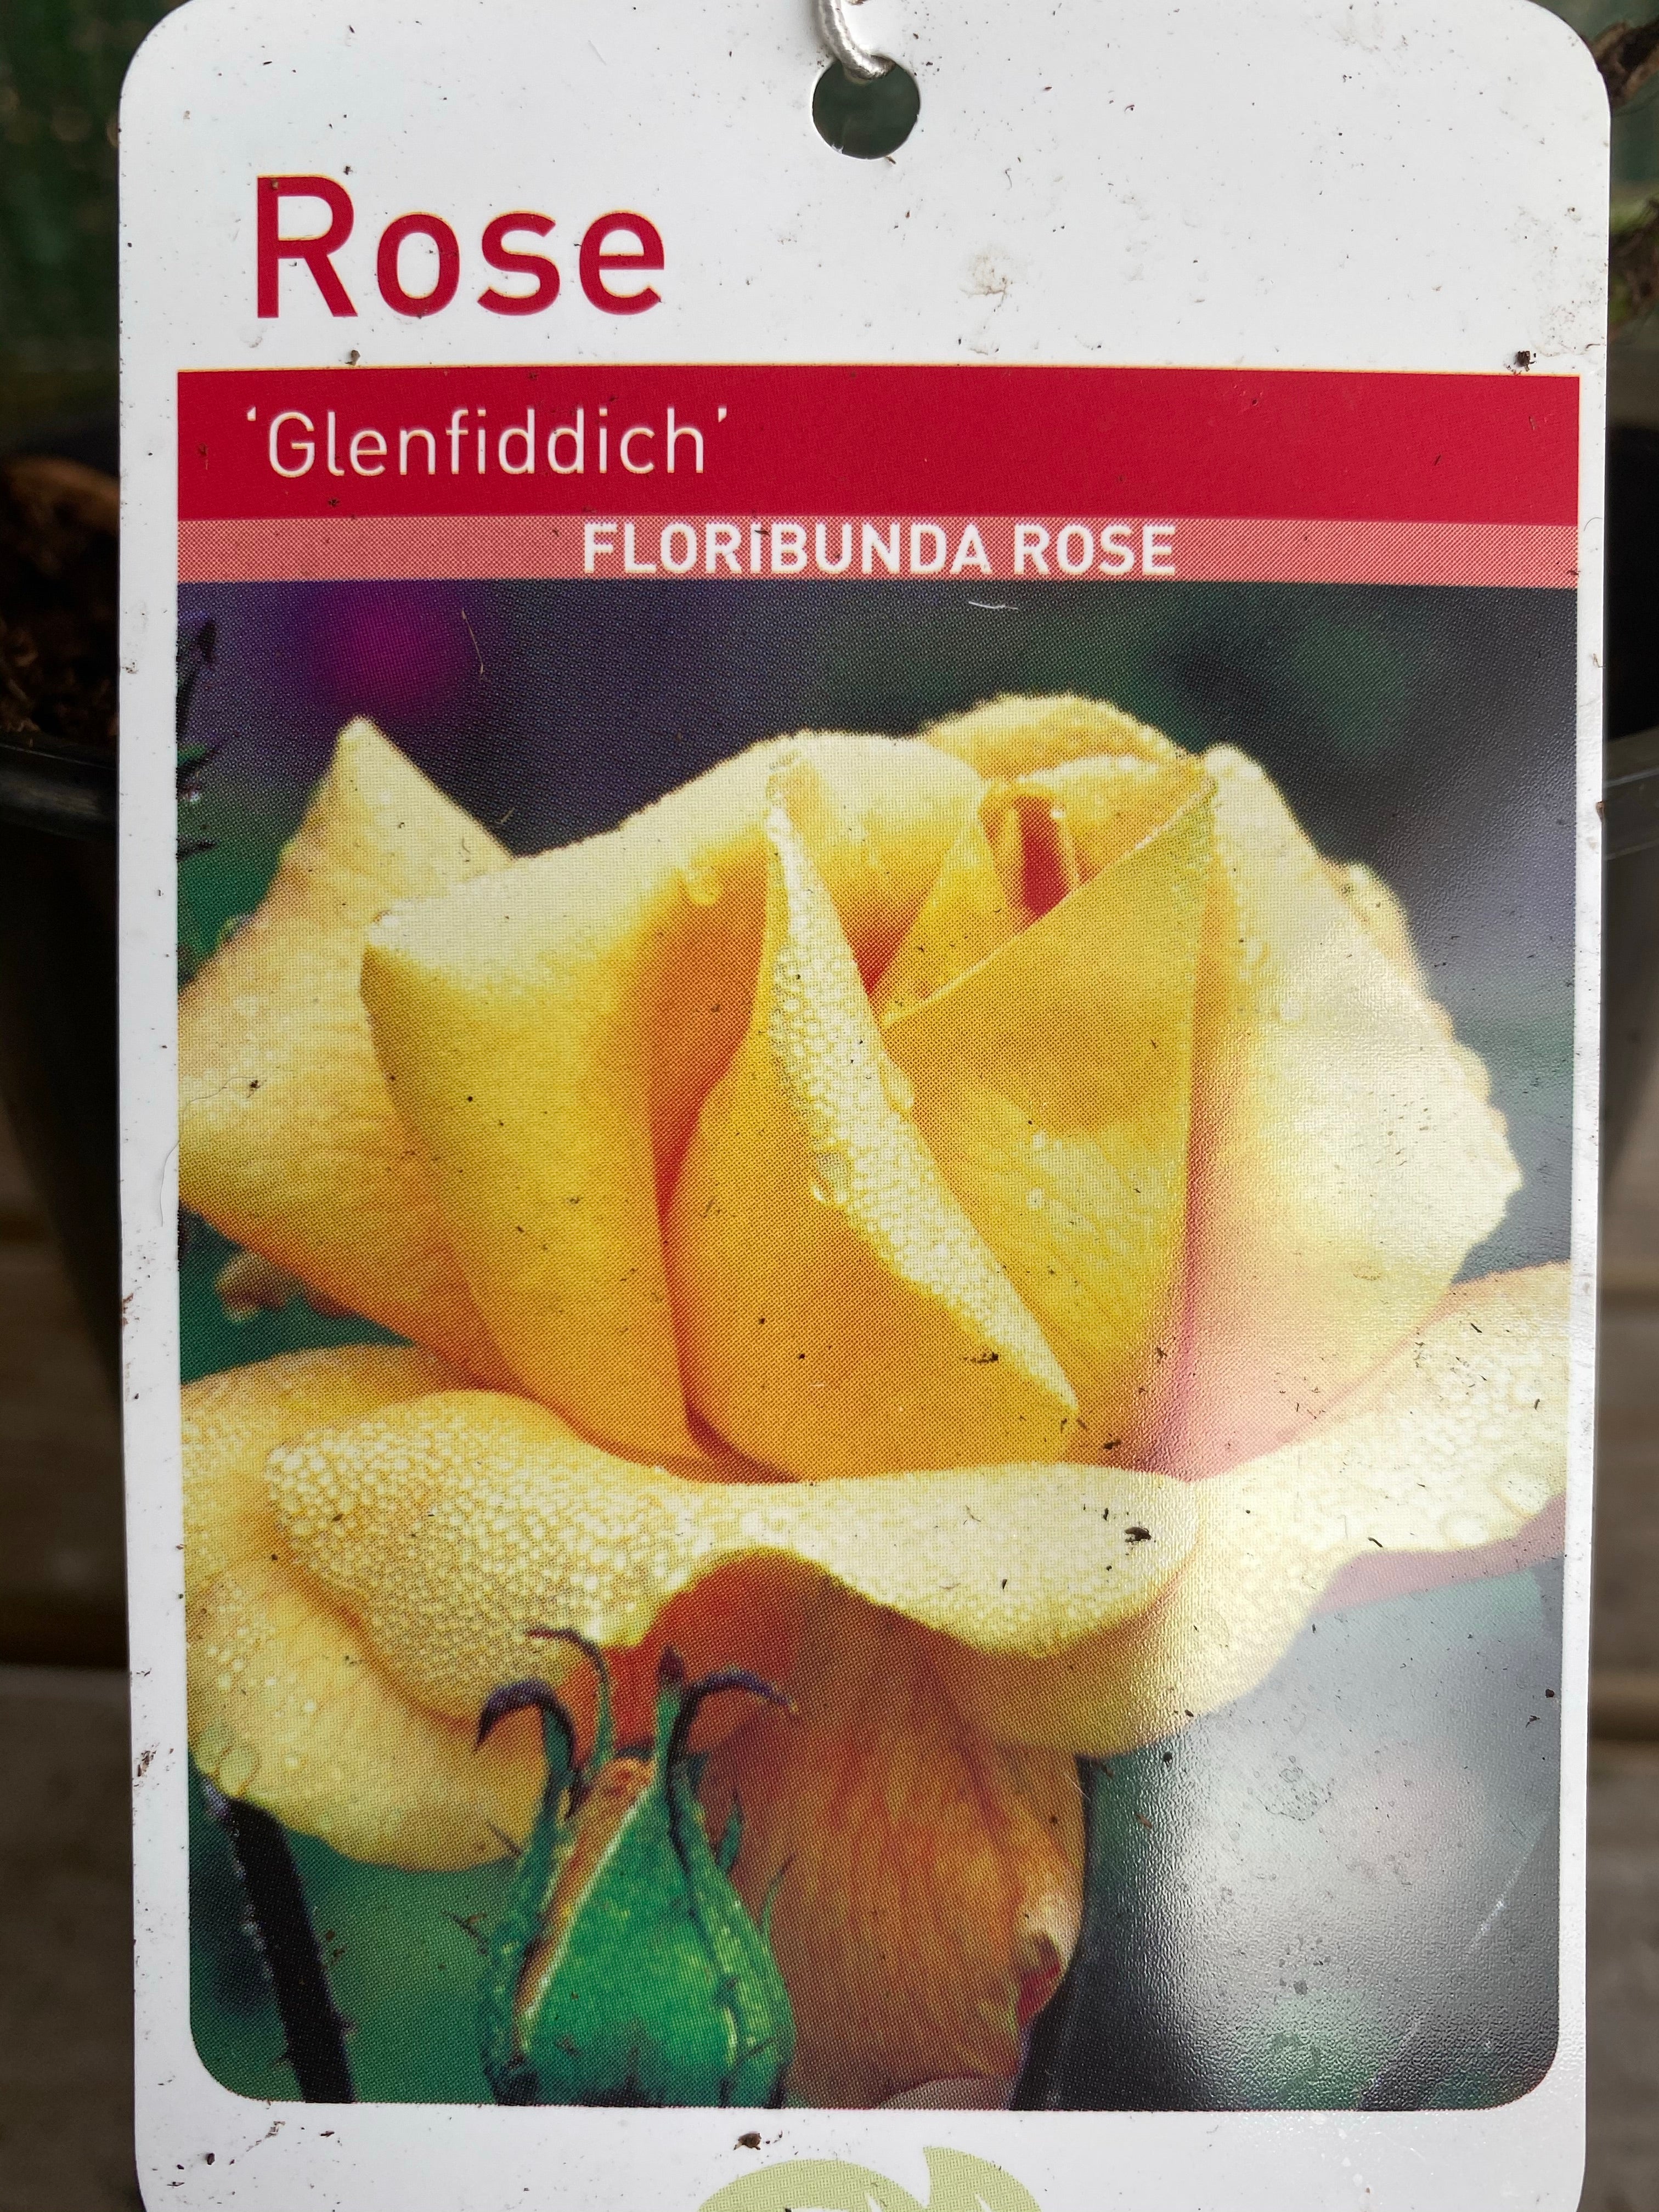 Rose “Glenfiddich"